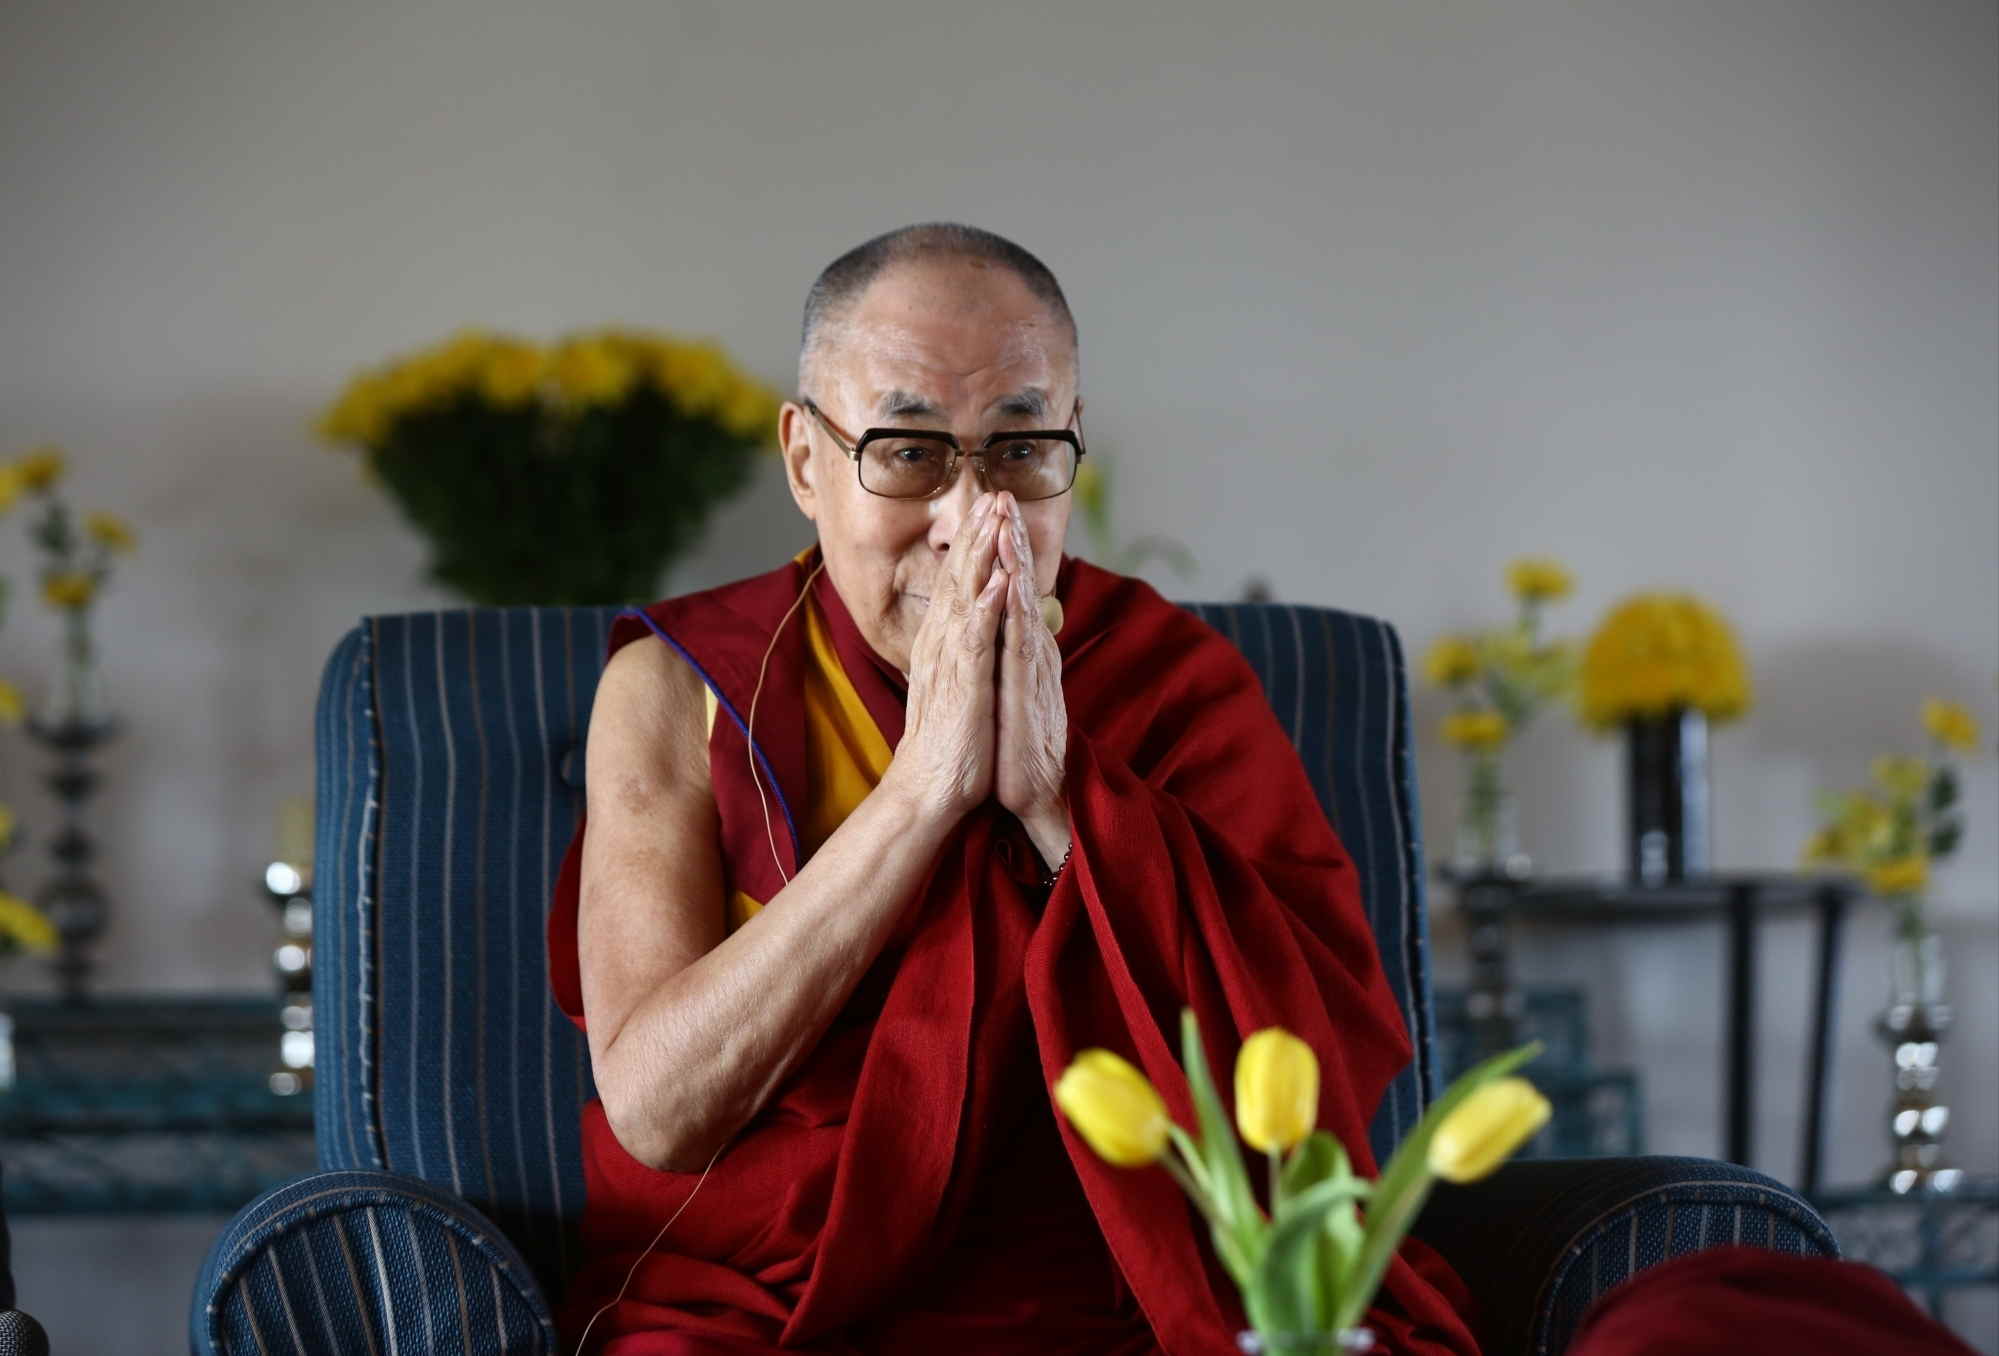 The Latest Chinese conspiracy against the Dalai Lama foiled! Again!